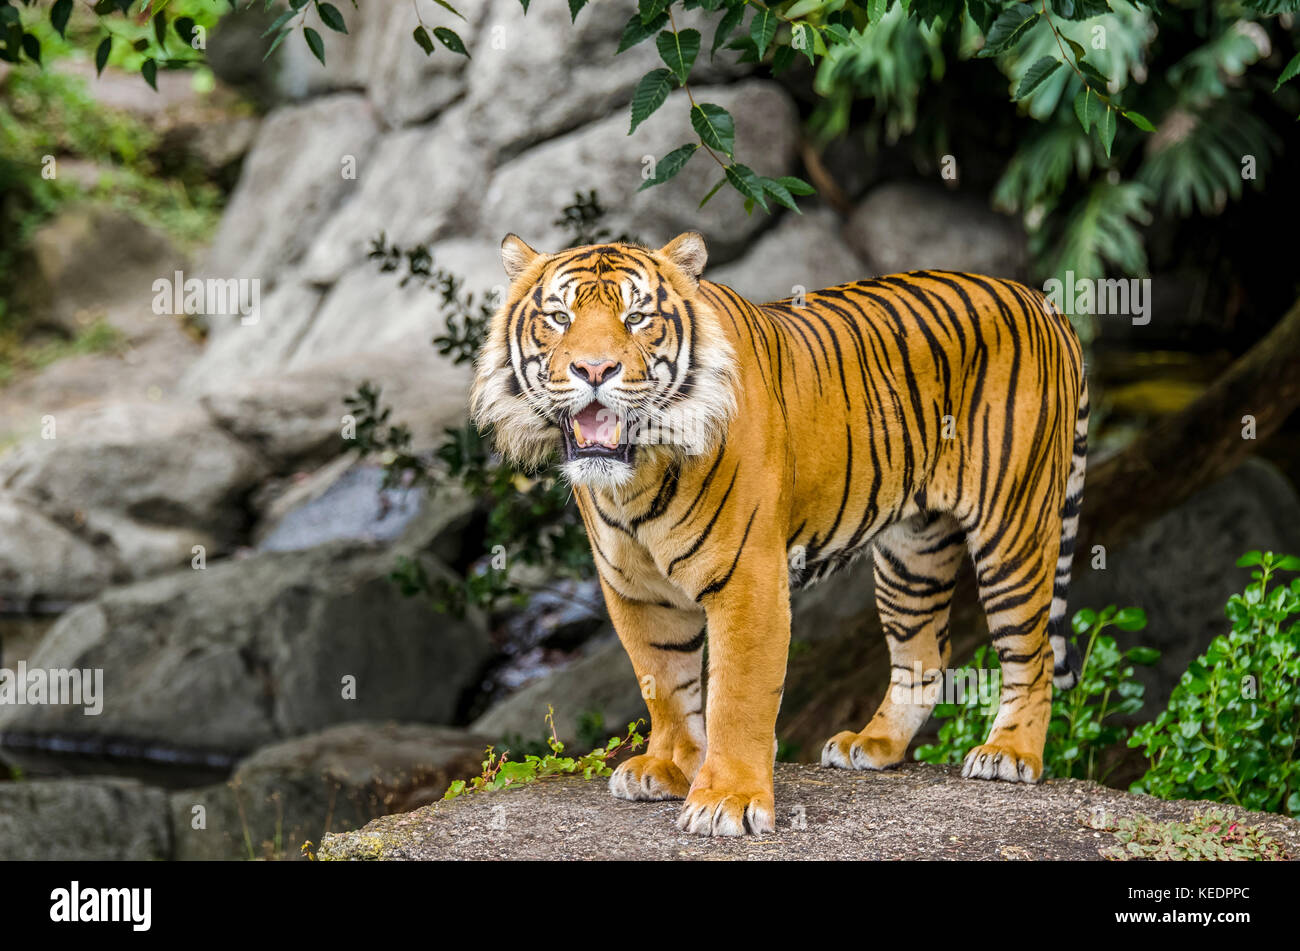 Sumatran tiger standing on the rock and facing the camera Stock Photo